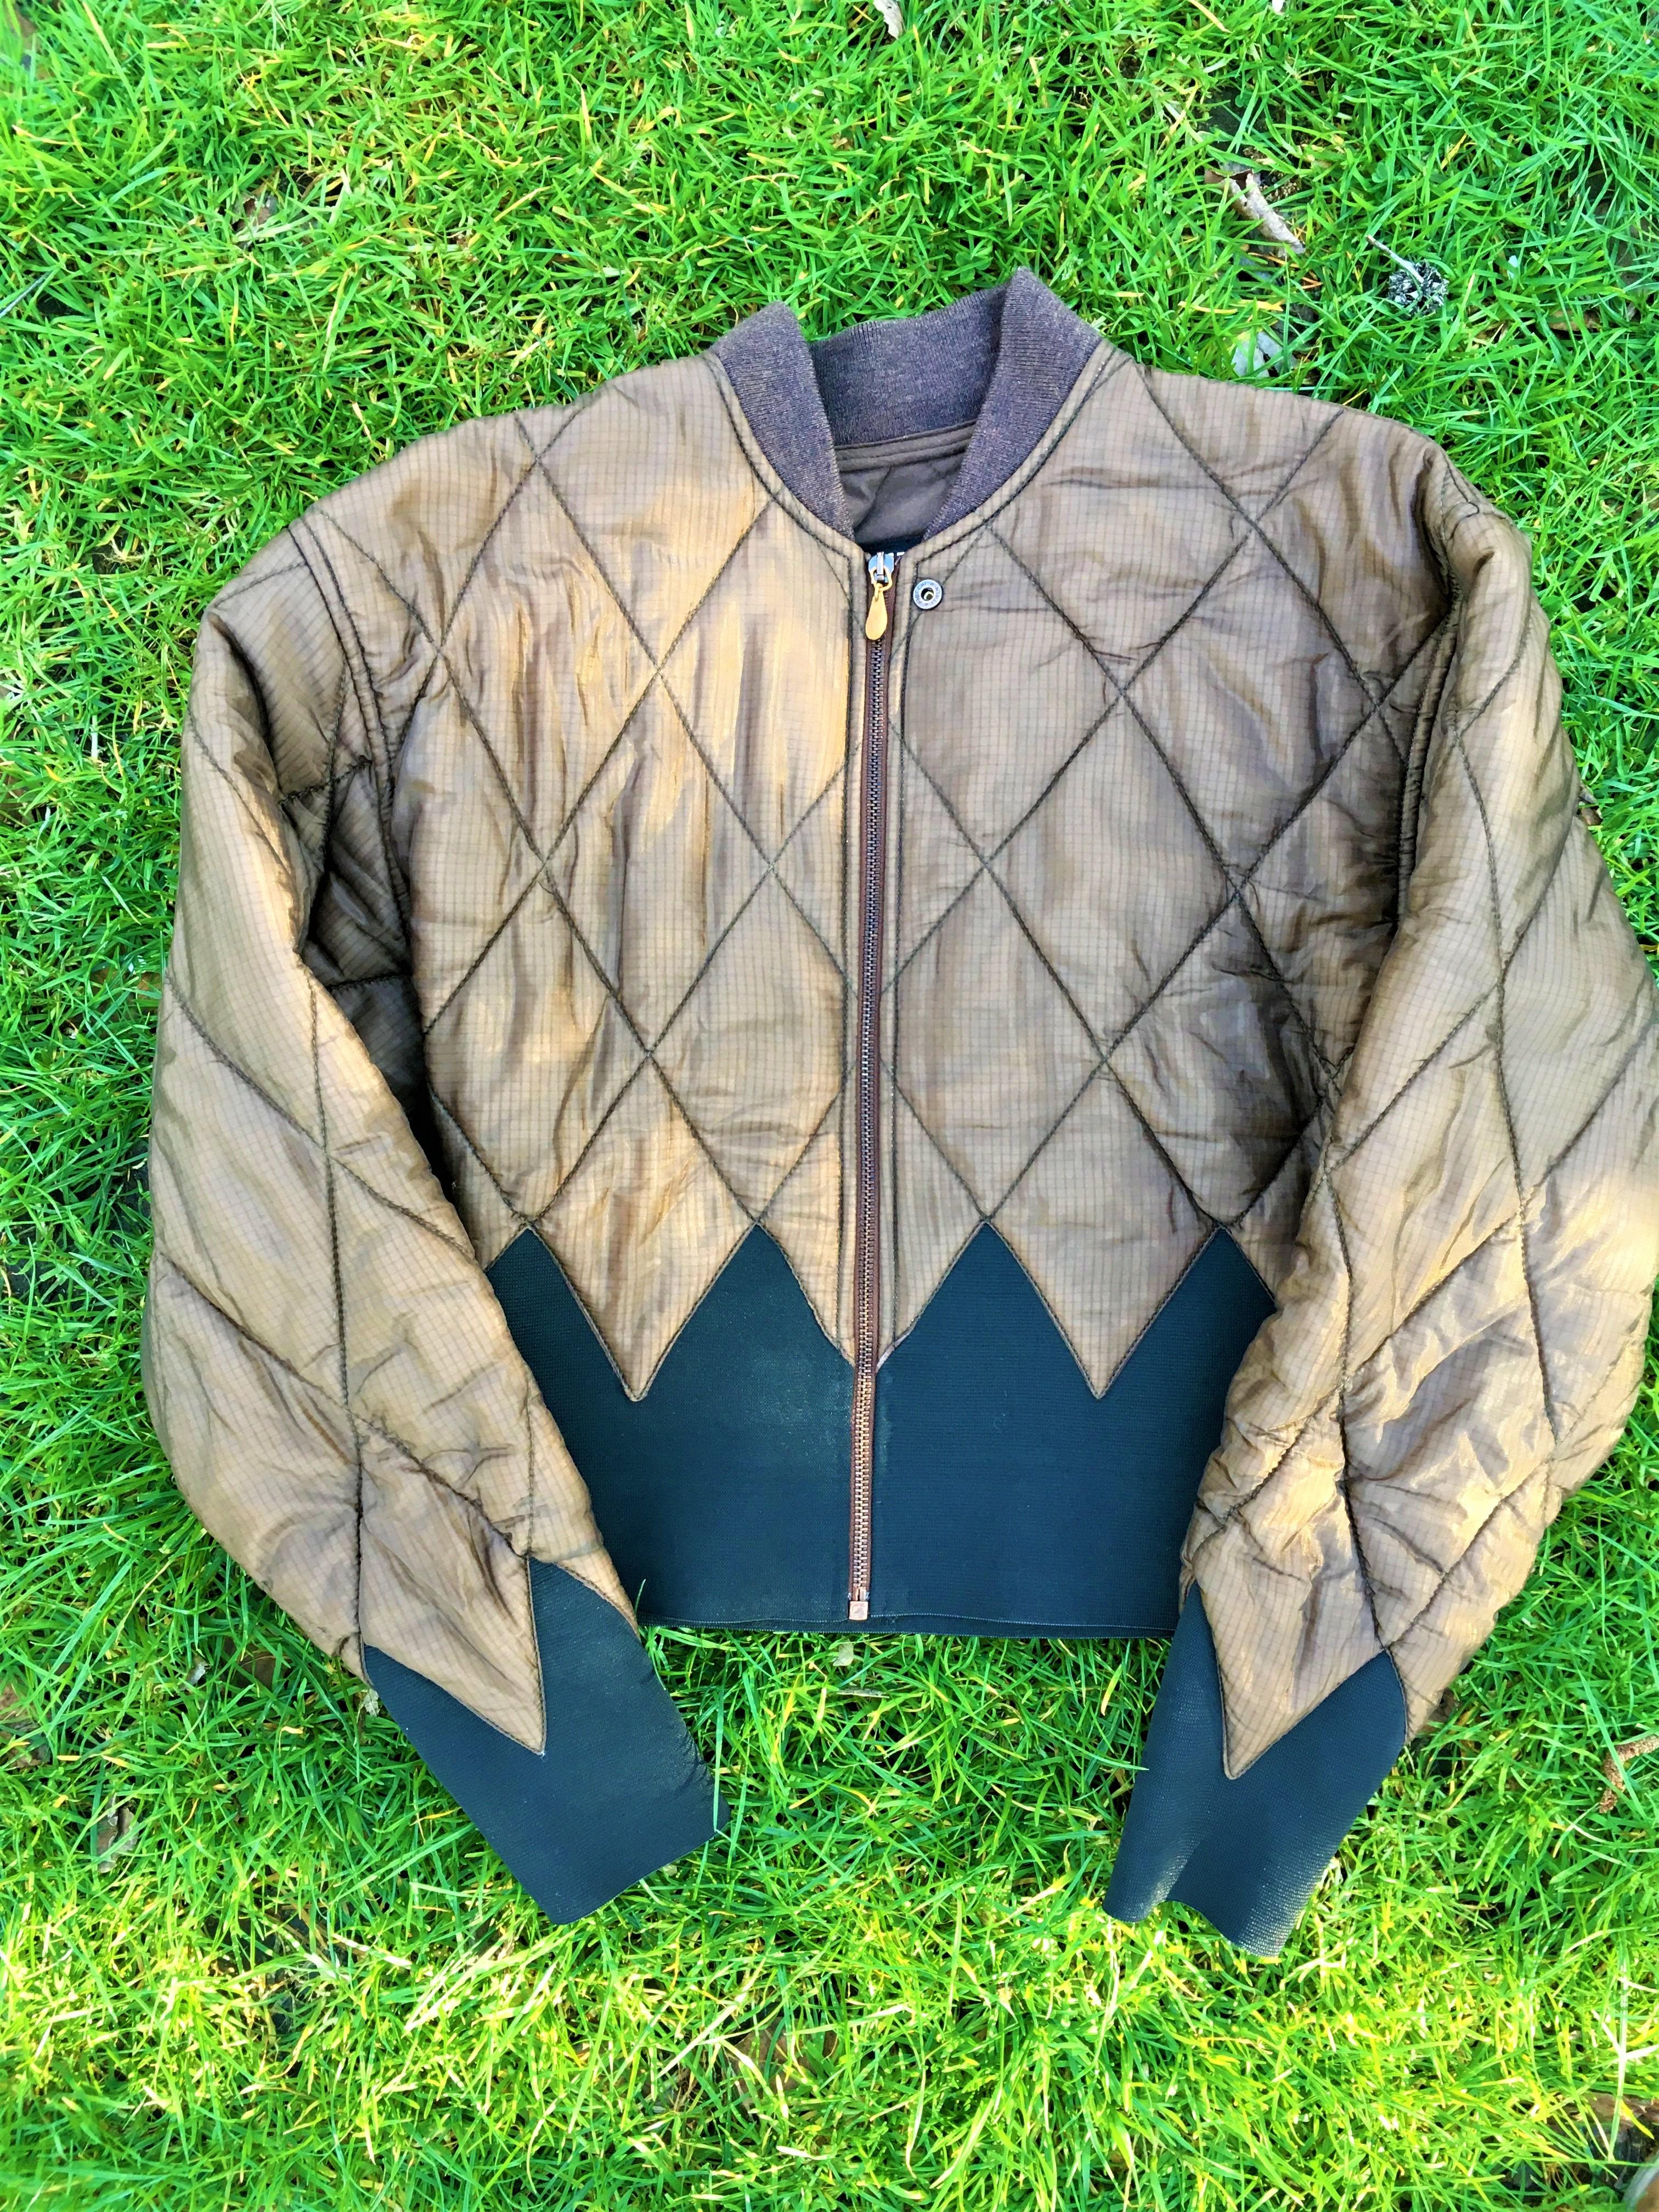 Super vintage jacket by Jean Paul Gaultier! 
Unique silhouette! 
VERY GOOD condition.
Color: khaki green / brown.

Size: Large. 
Length: 54 cm / 21.2 inch
Armpit to armpit: 50 cm / 19.7 inch
Shoulder to shoulder: 53 cm / 20.9 inch
Sleeve: 61 cm / 24